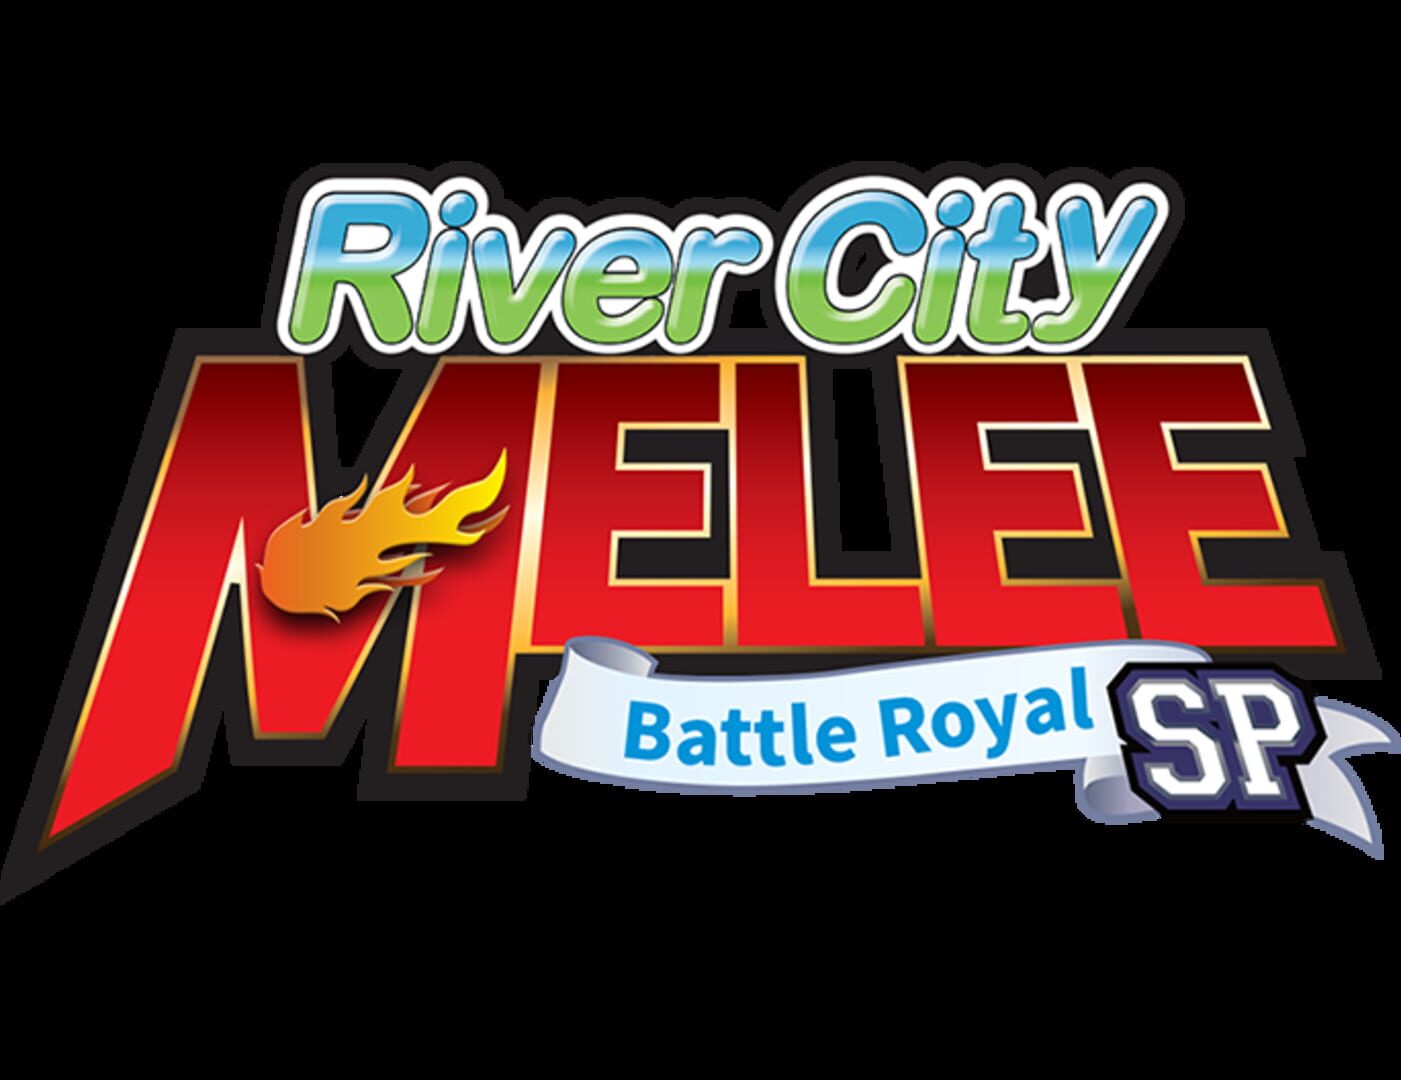 Arte - River City Melee: Battle Royal Special